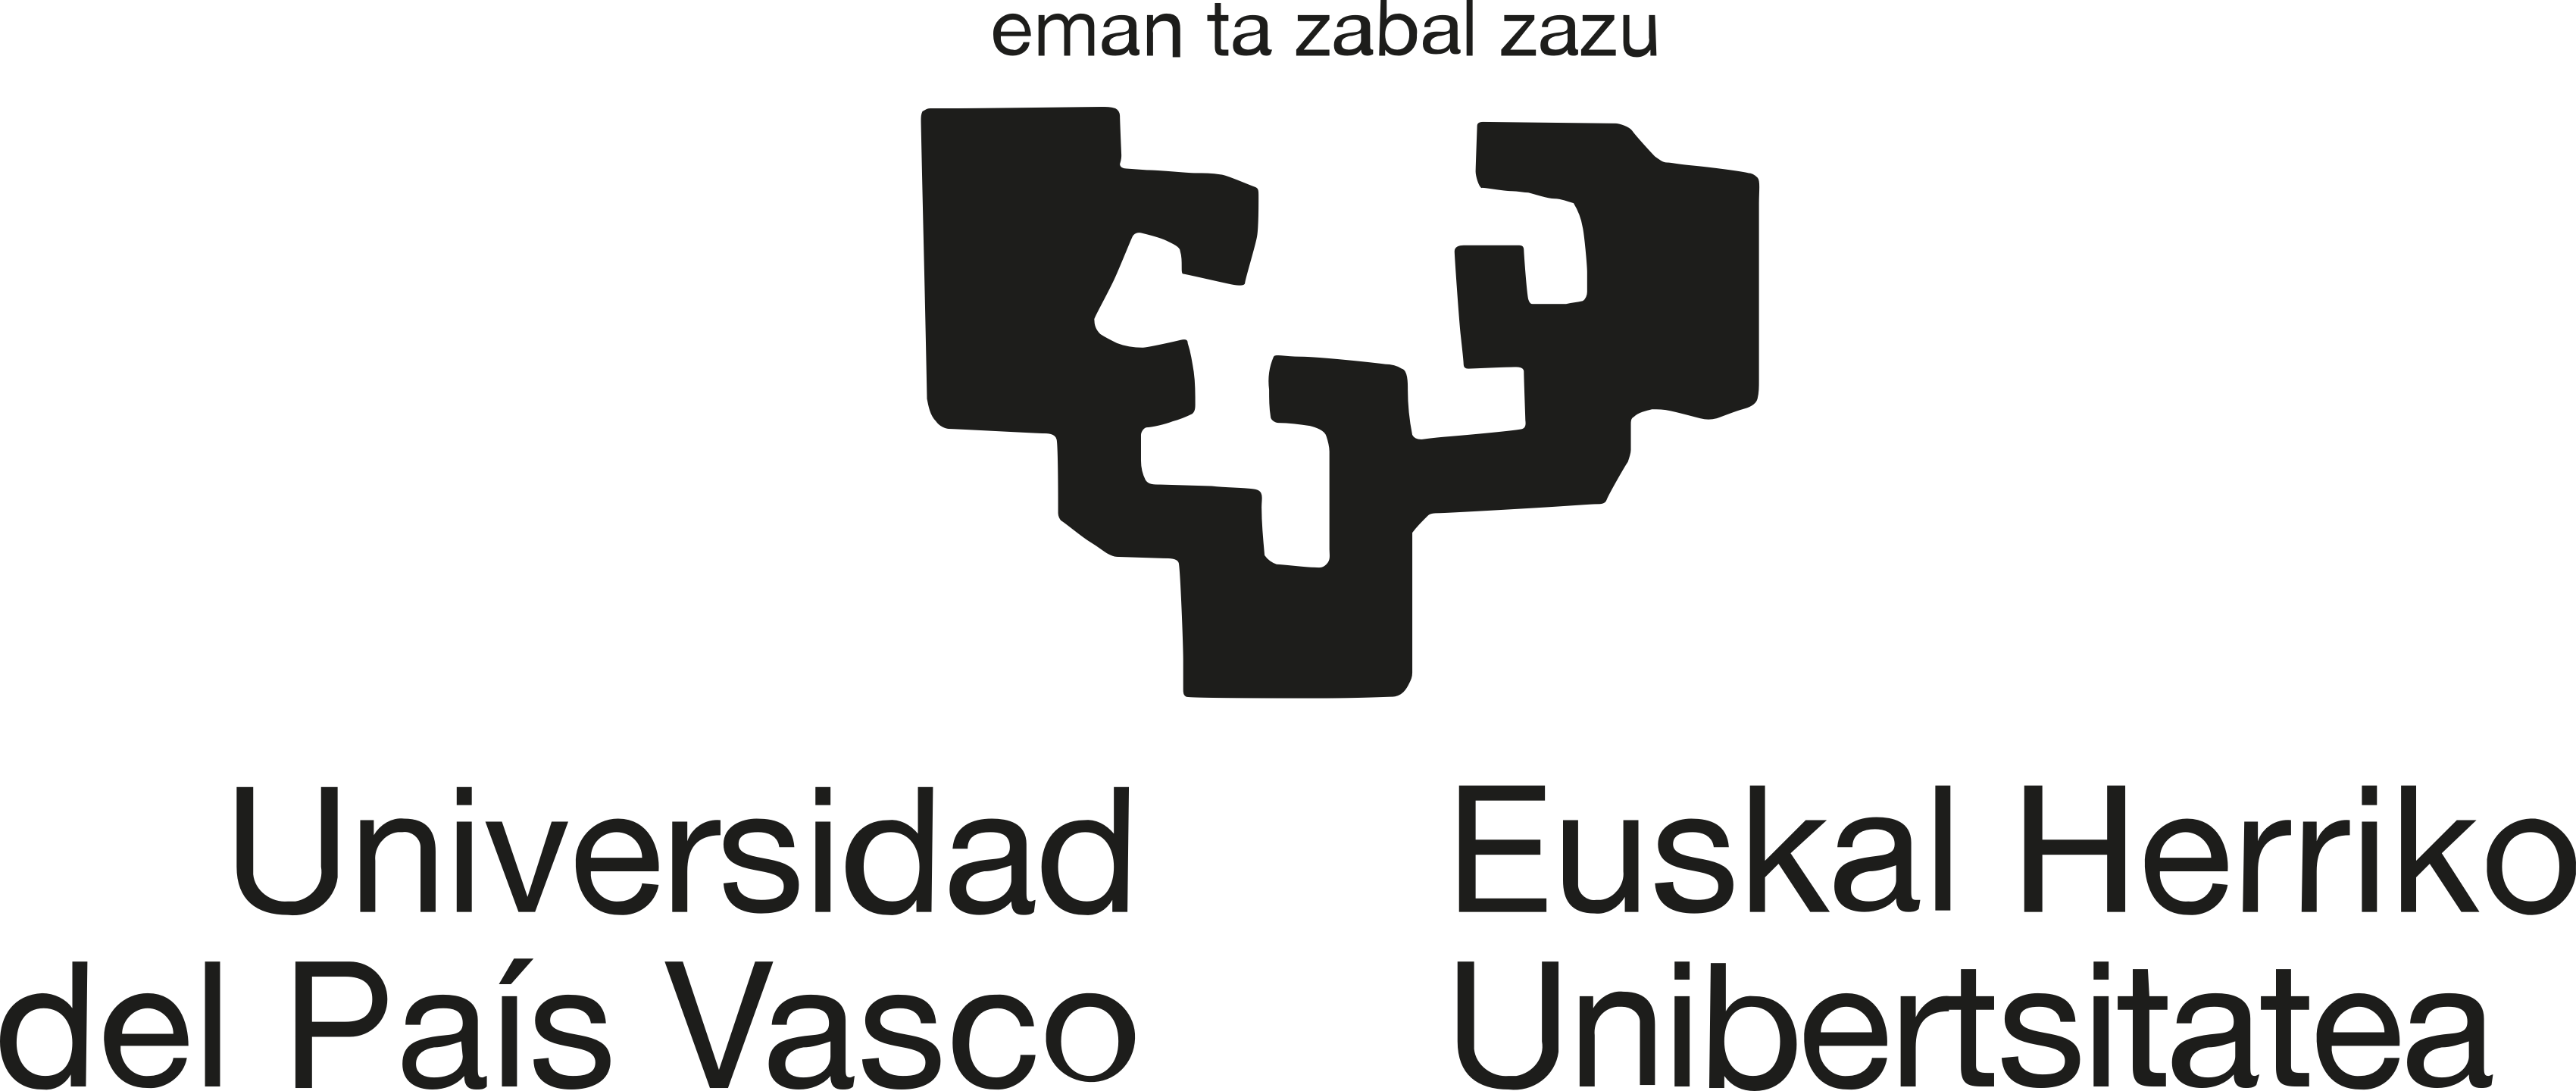 Universidad del País Vasco / Euskal Herriko Unibersitatea